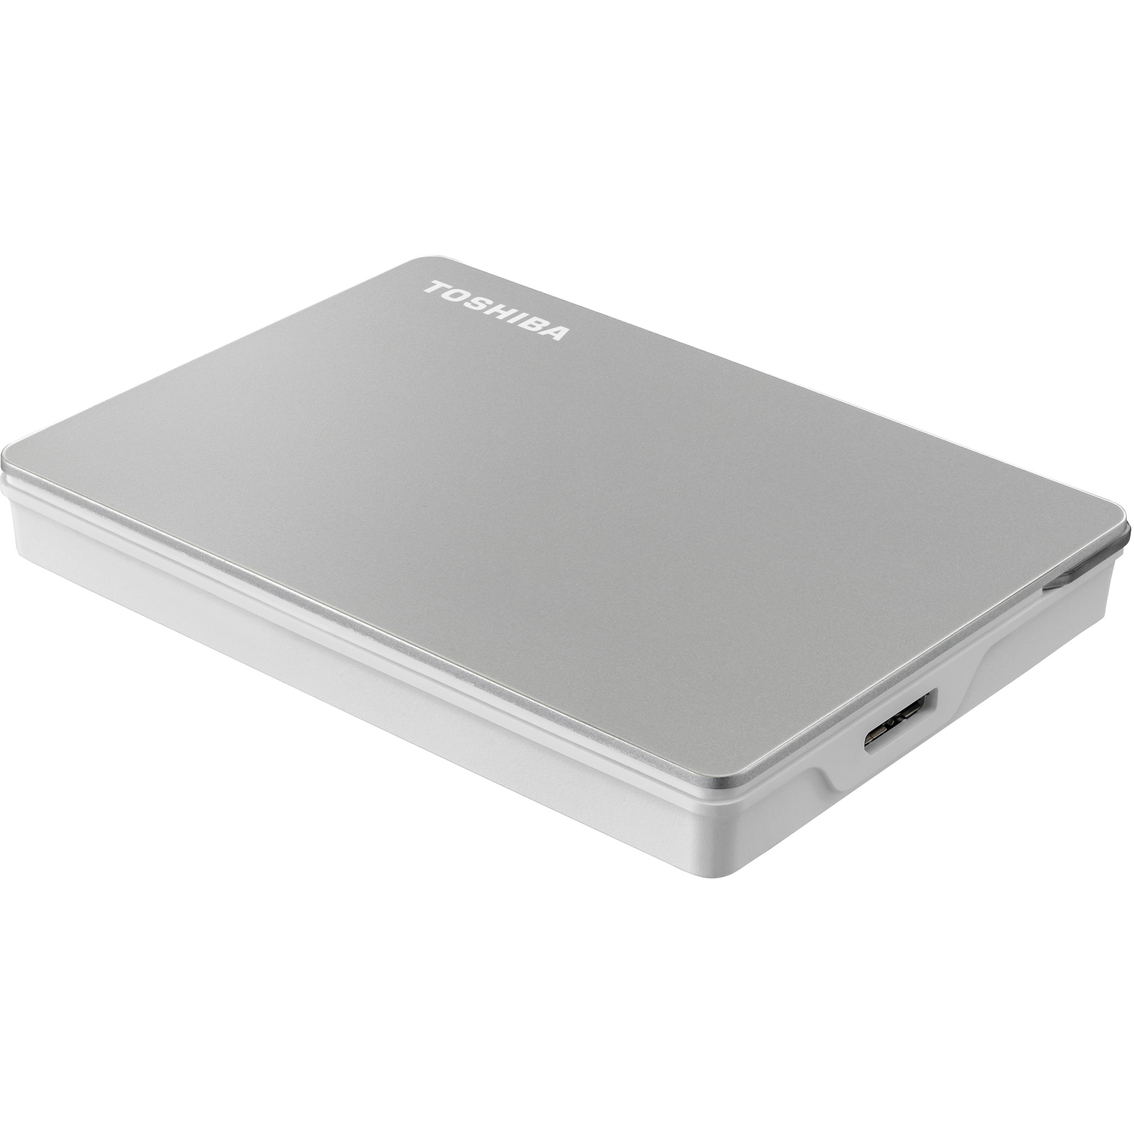 Toshiba Canvio Flex Portable External 1TB Hard Drive - Image 3 of 4